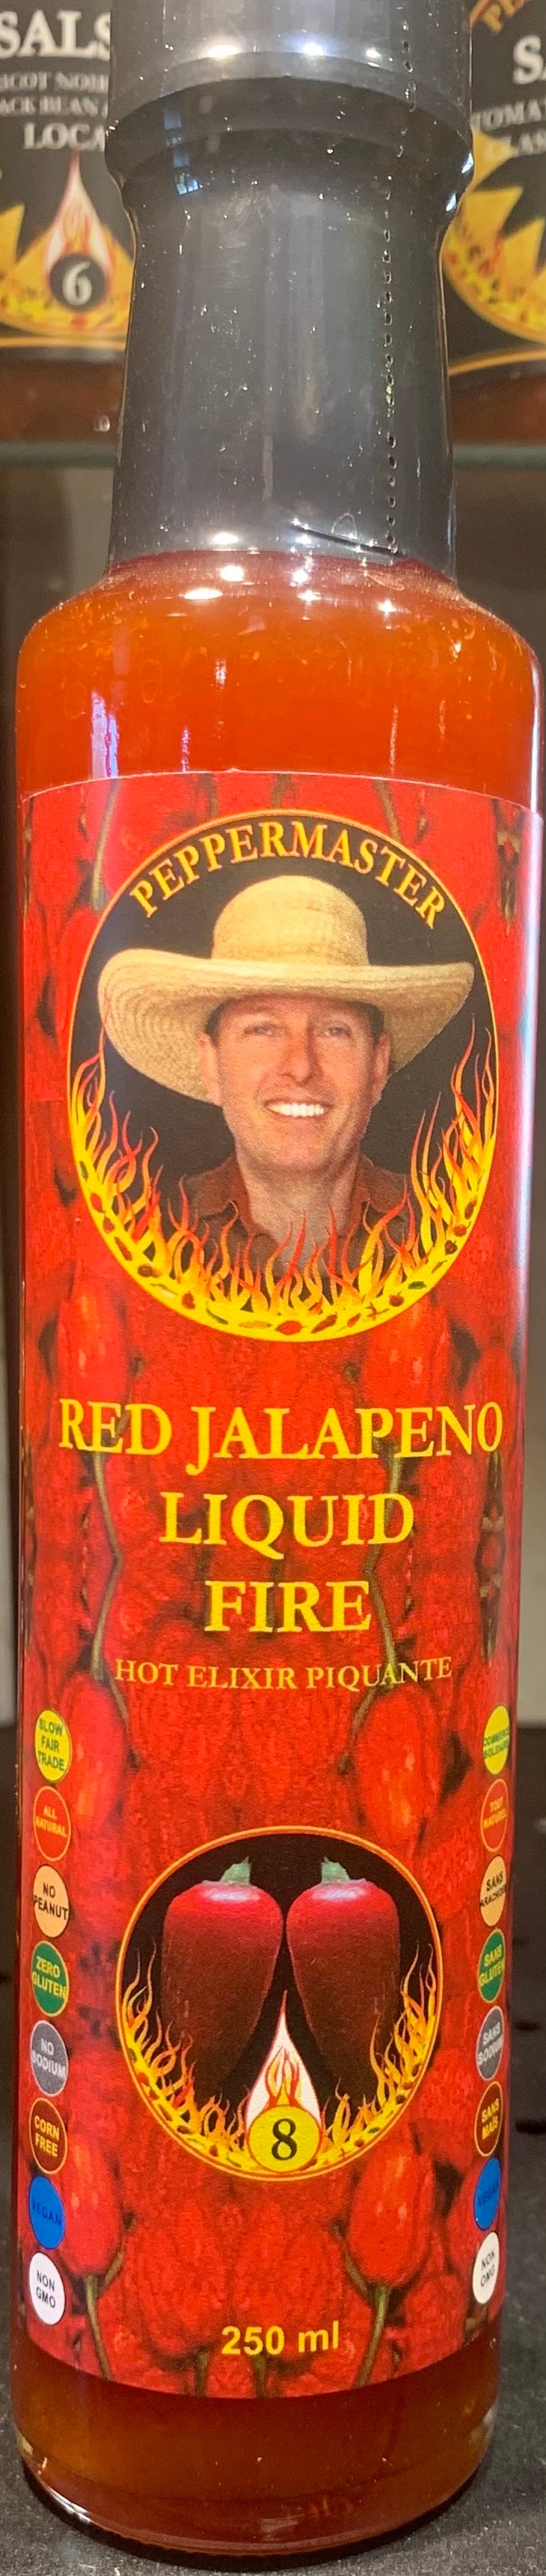 Red Jalapeno Liquid Fire